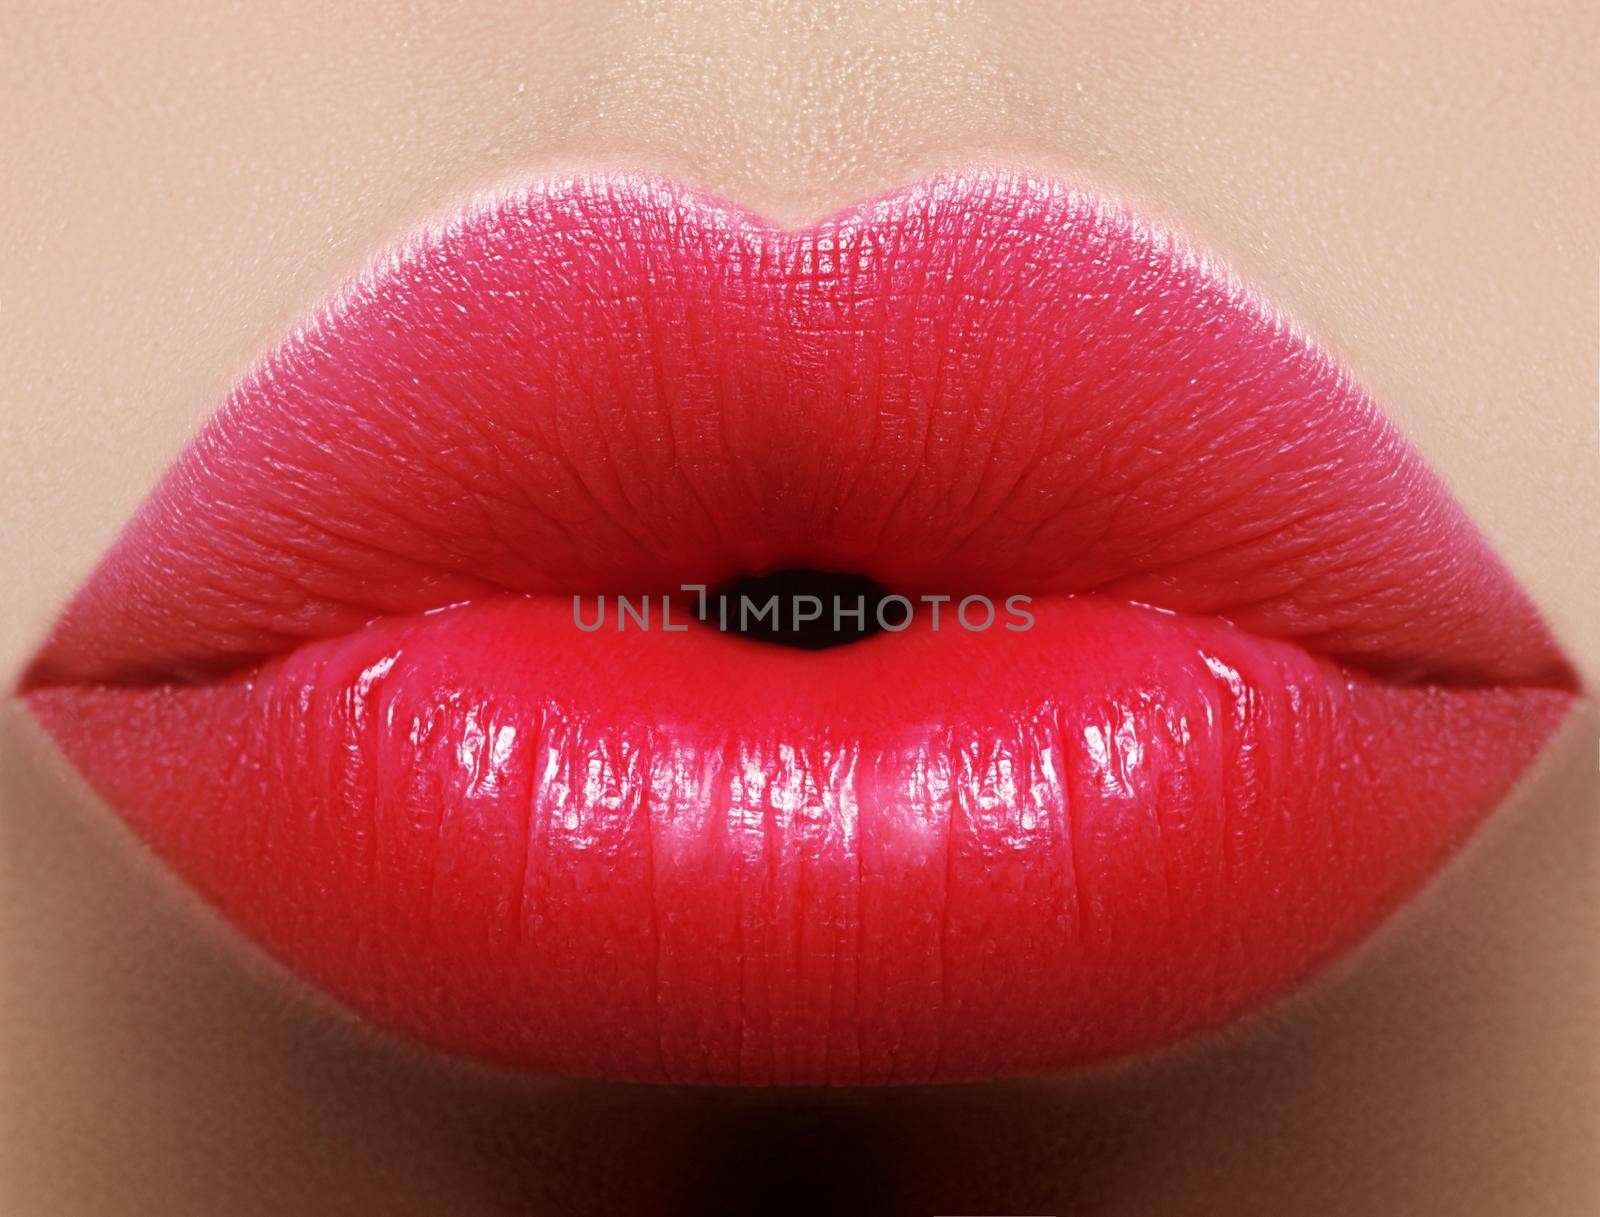 Close-up perfect red lip makeup beautiful female mouth. Plump sexy full lips. Macro photo face detail. Perfect clean skin, fresh lip make-up. Beautiful juicy lips